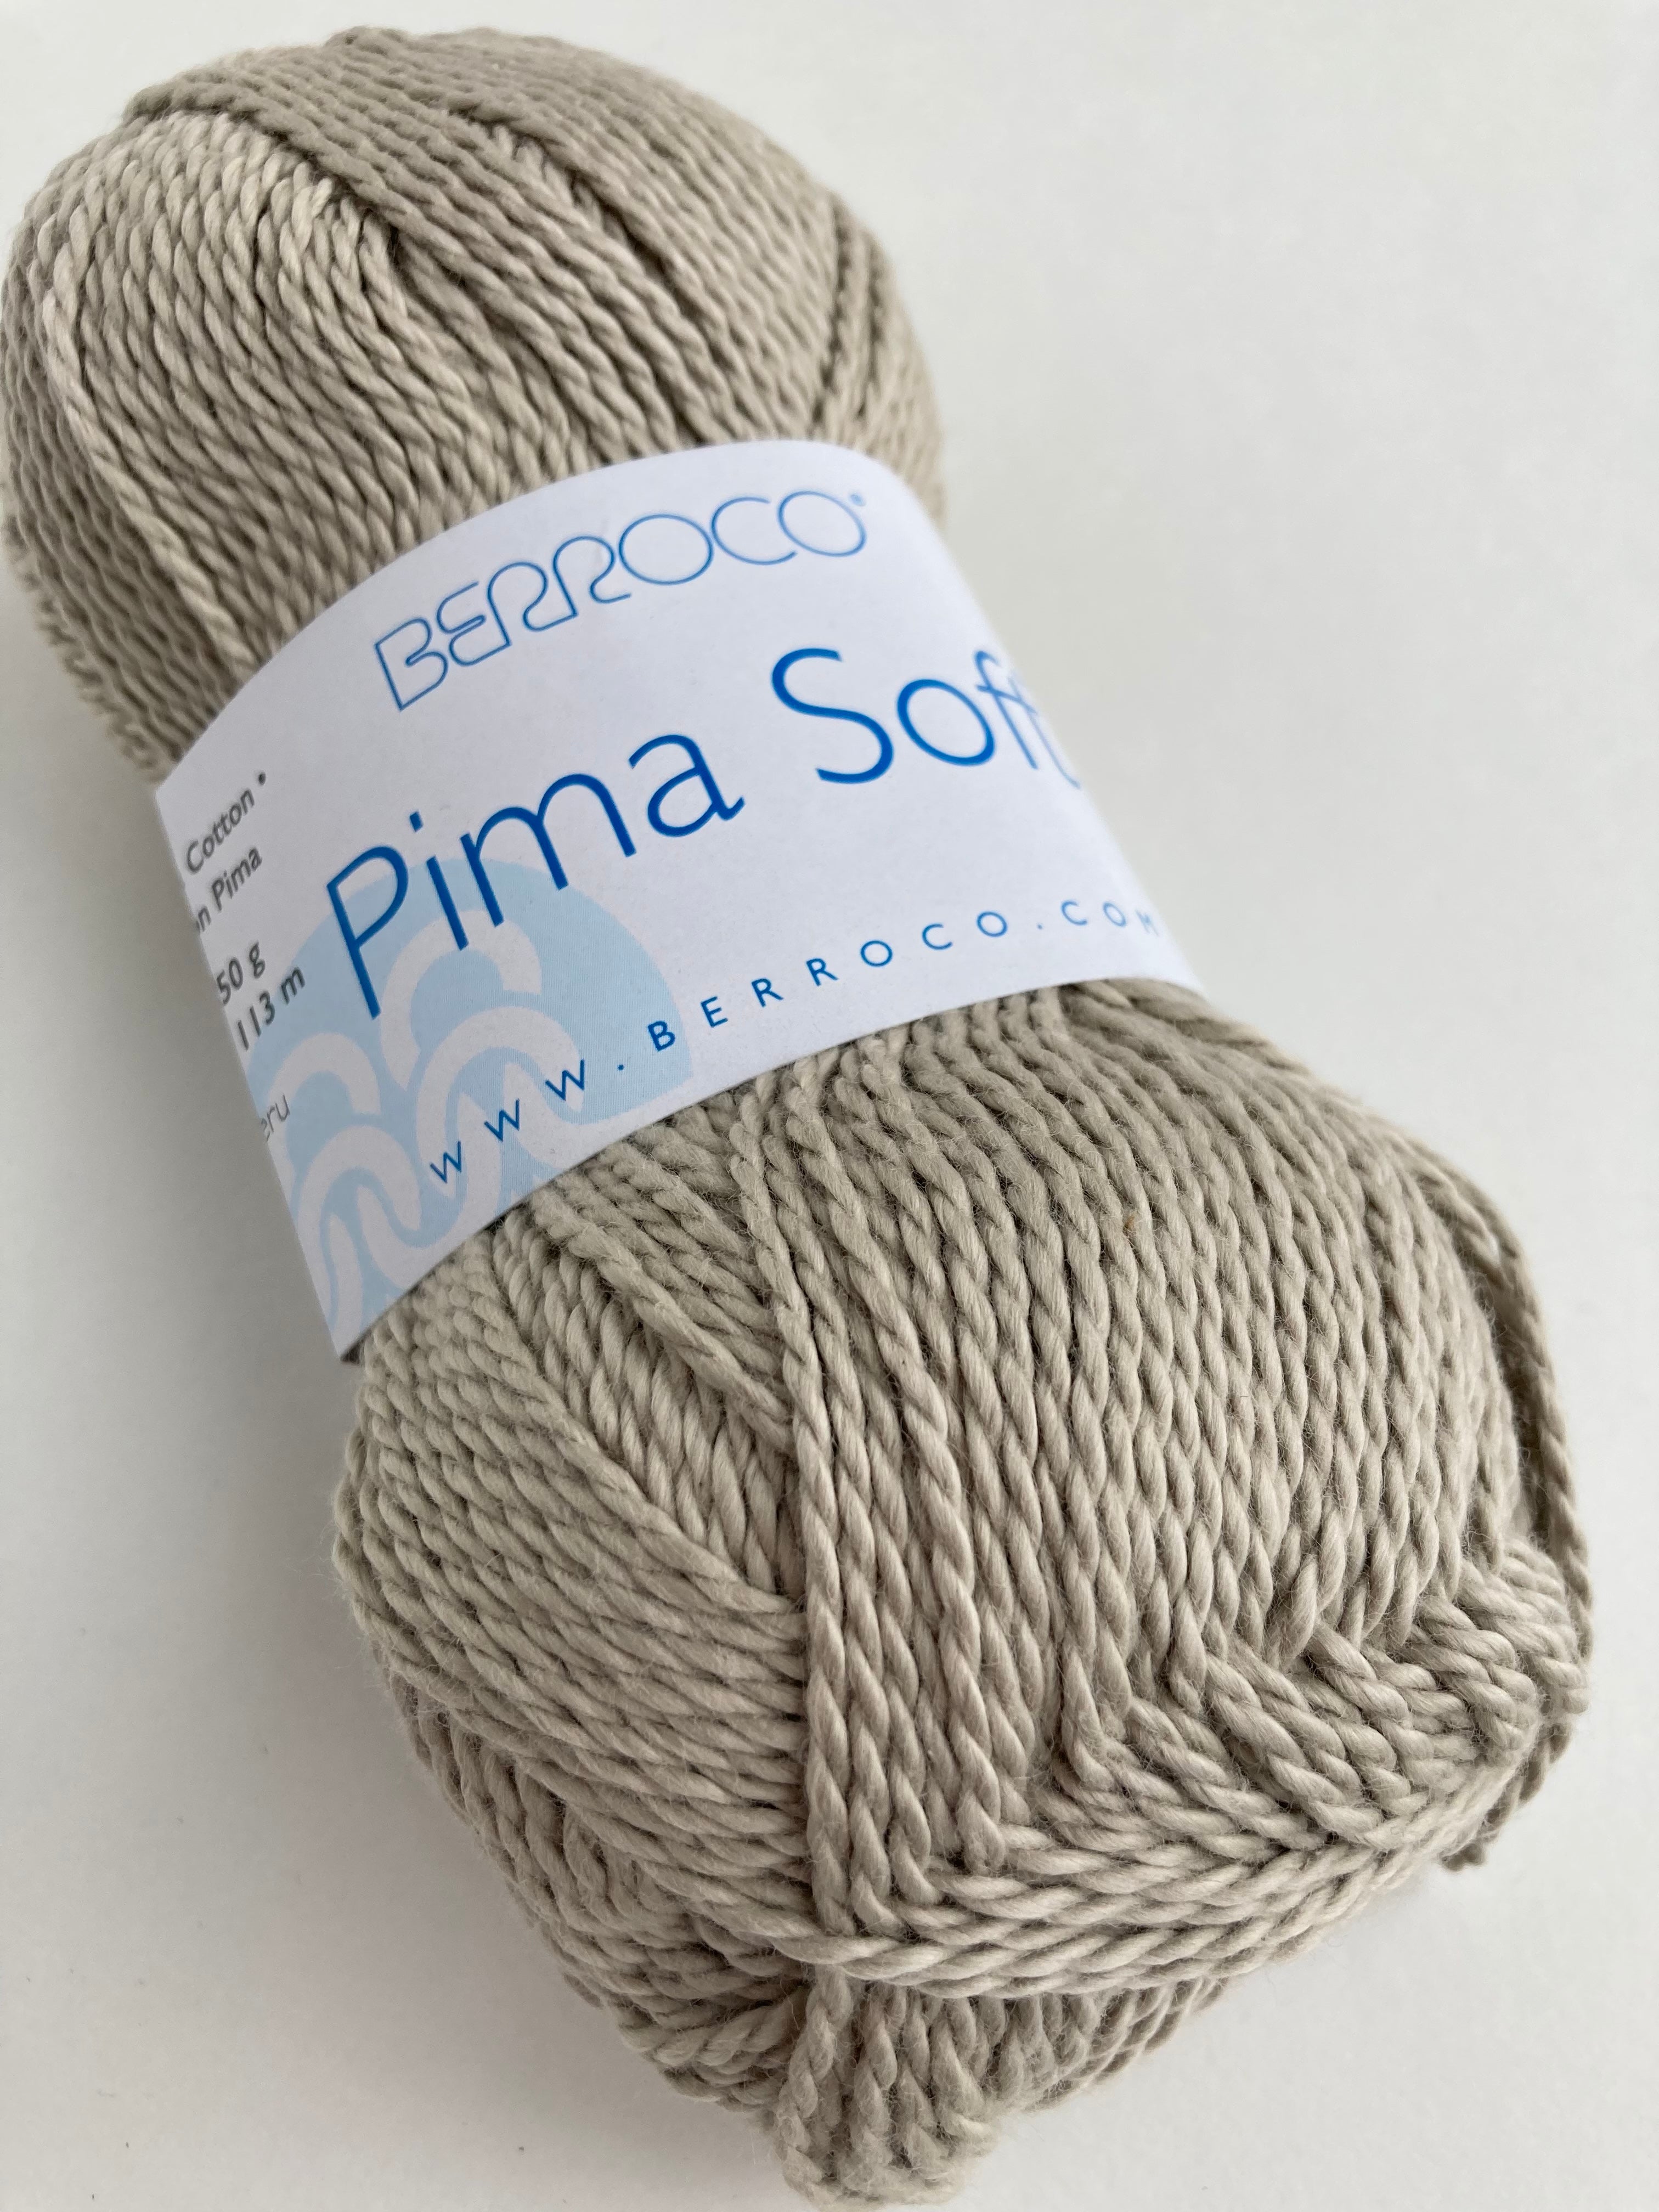 Sand Dollar 4604 - Pima Soft from Berroco